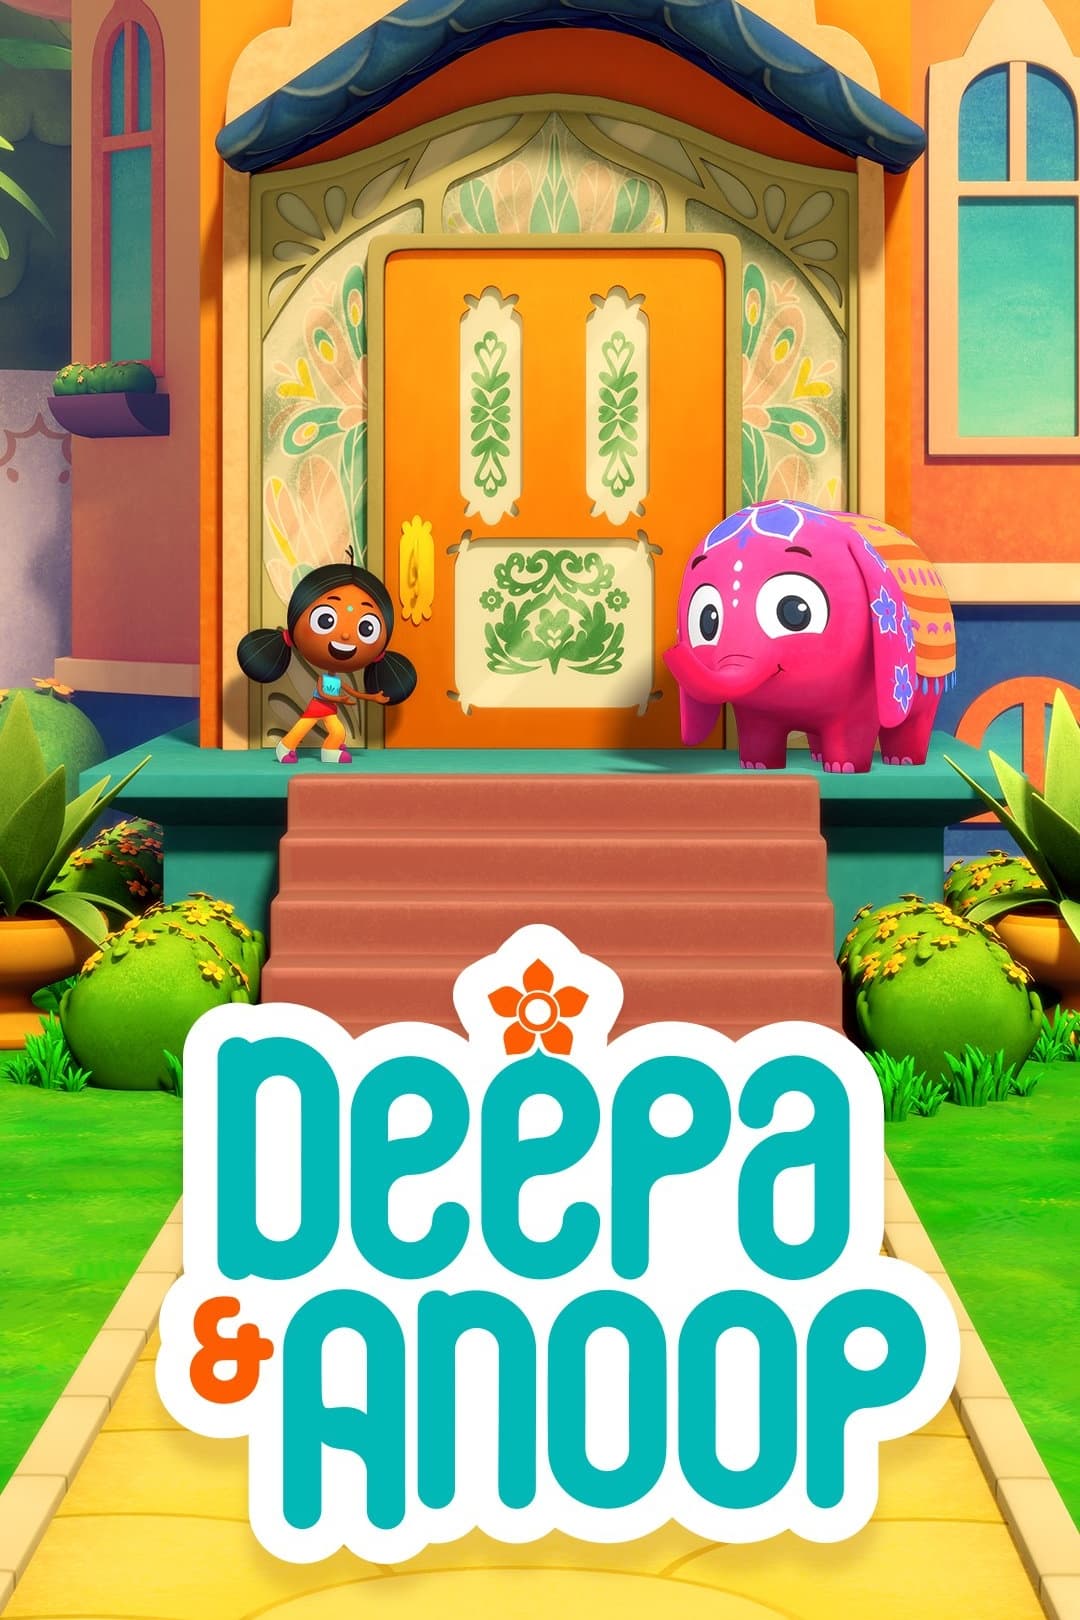 Deepa & Anoop TV Shows About Cat